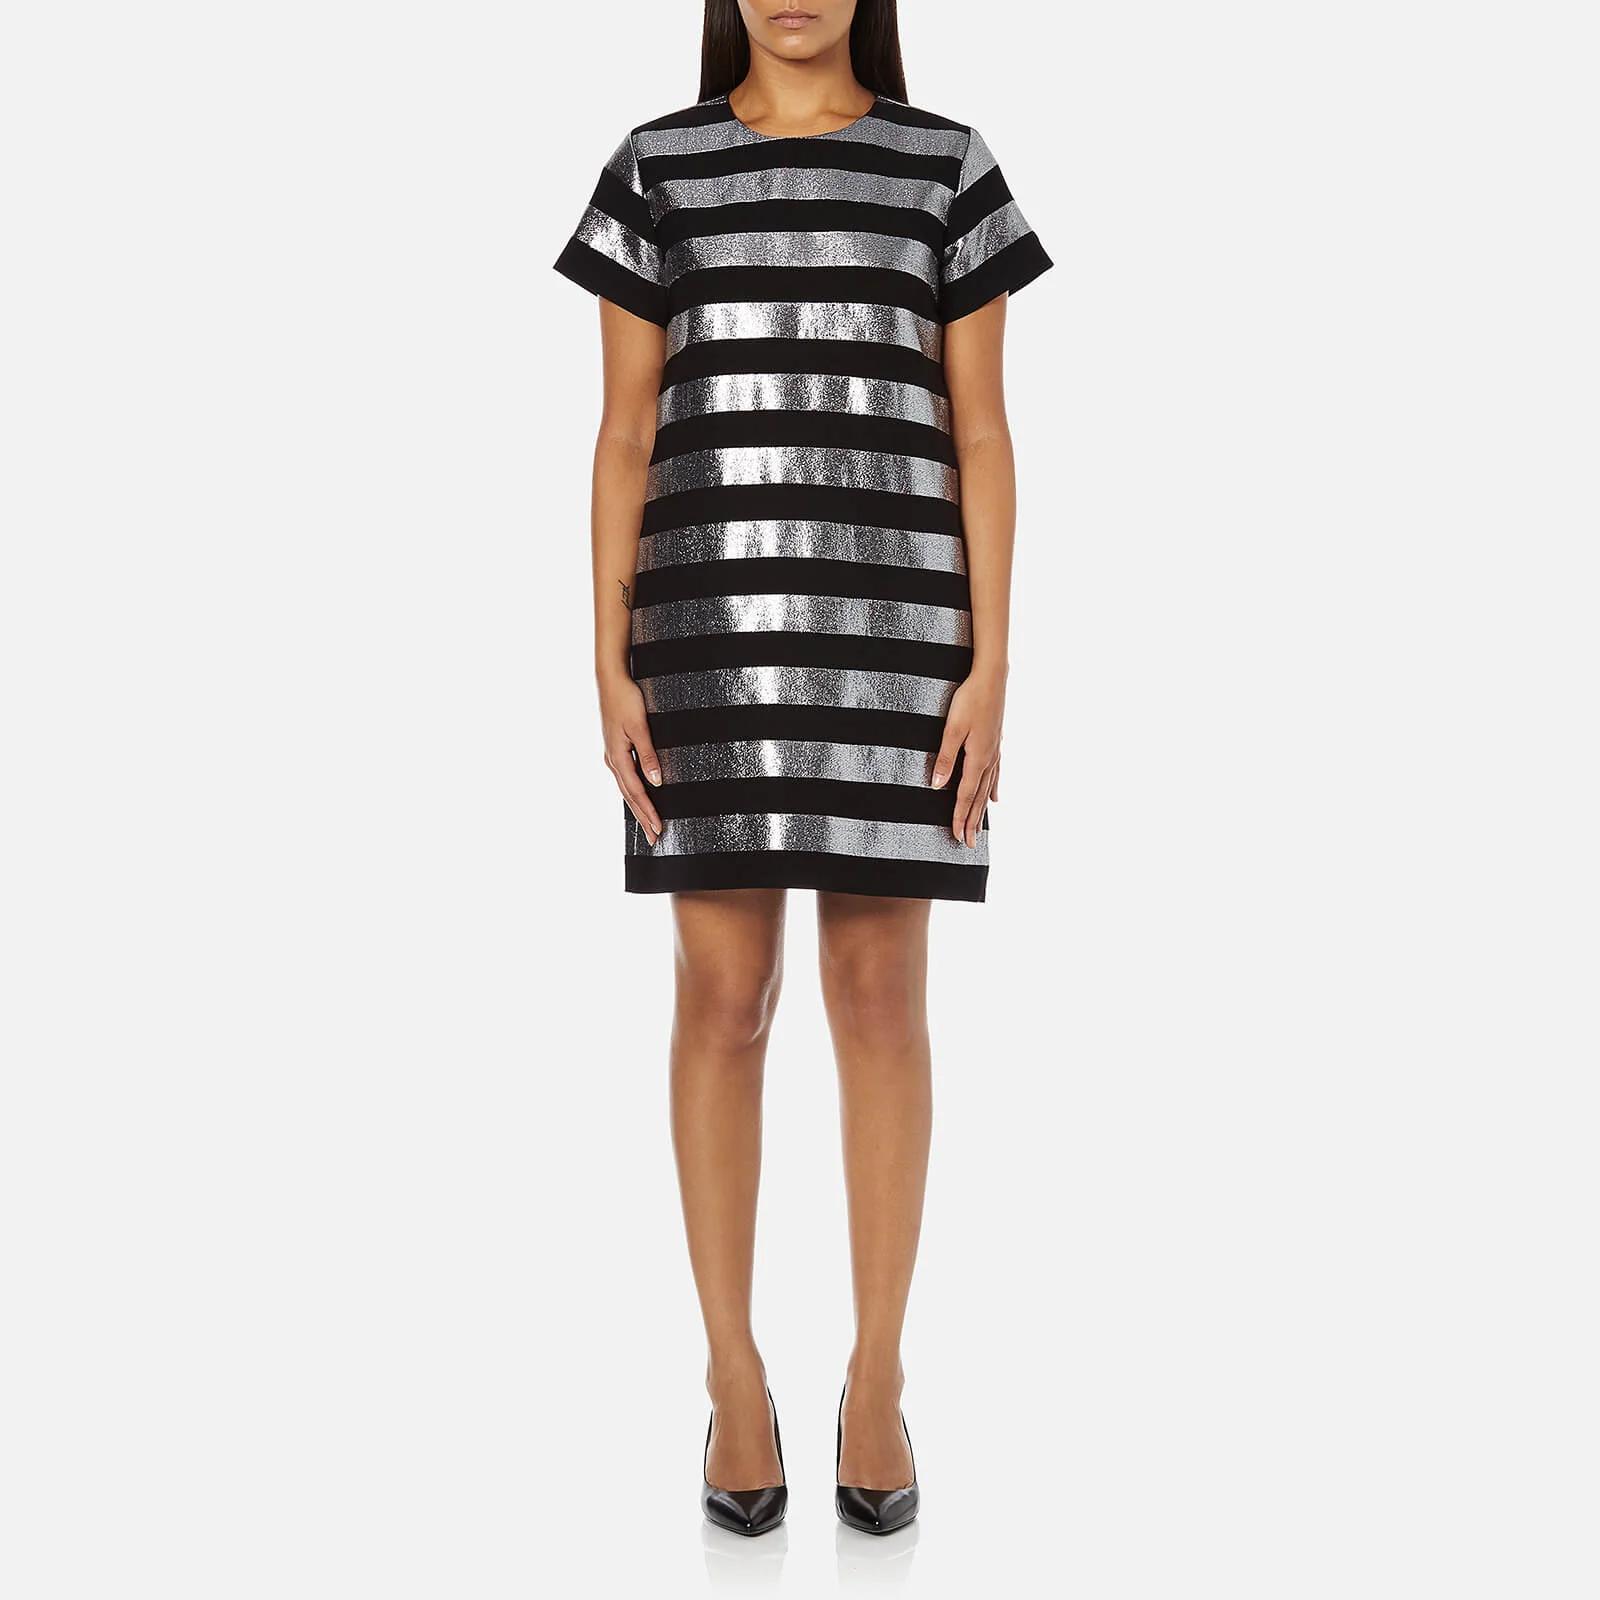 Marc by Marc Jacobs Women's Lame Stripe Dress - Black/Silver Image 1